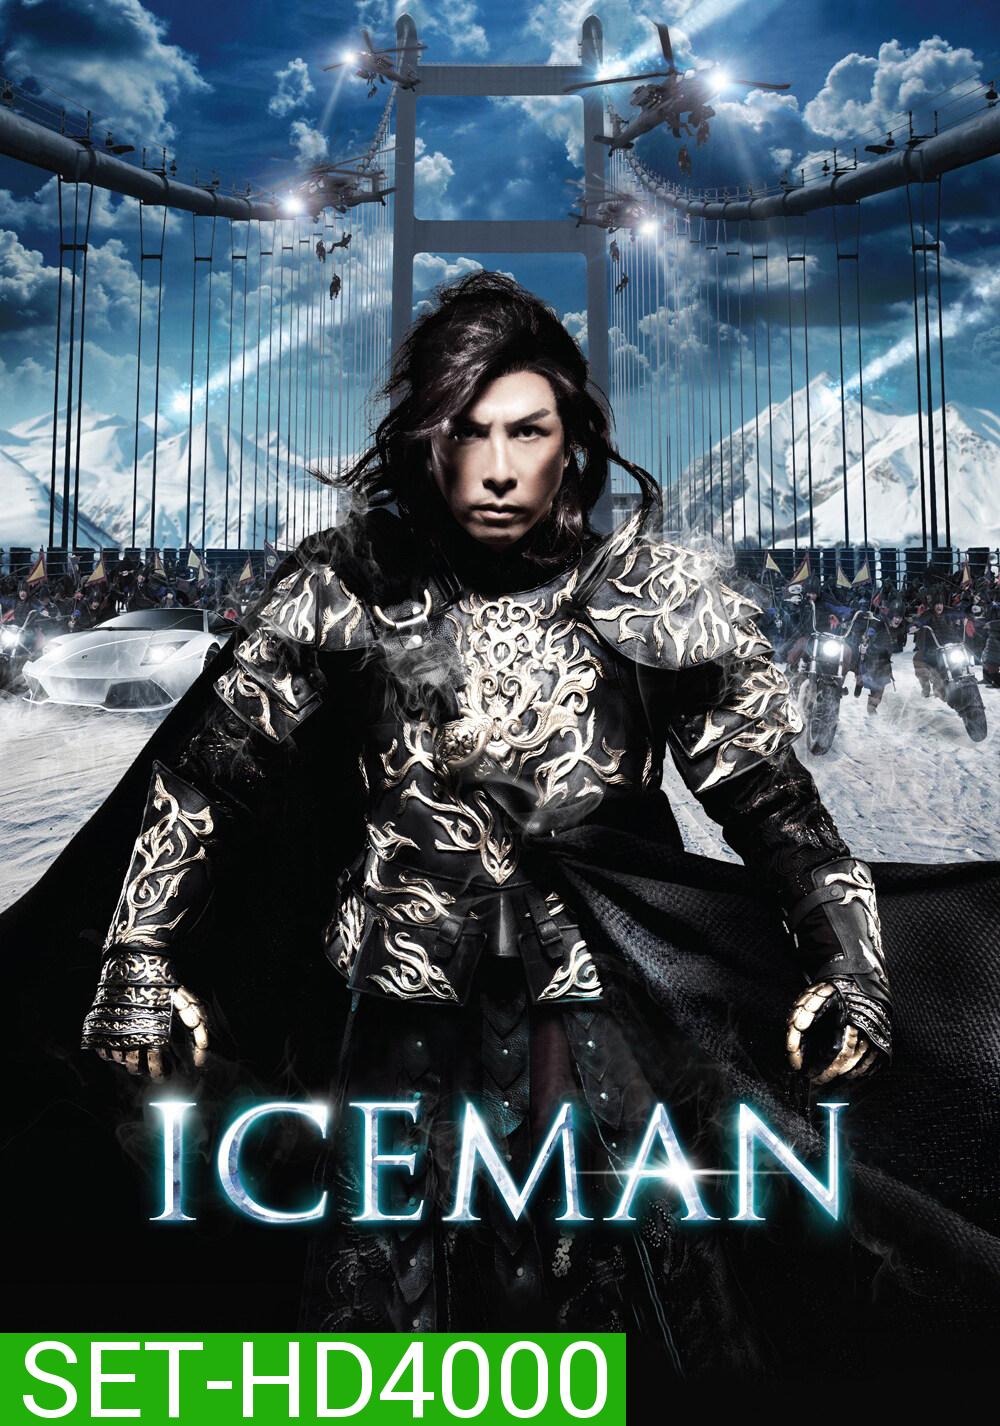 Iceman ล่าทะลุศตวรรษ ภาค 1-2 (2014,2018) DVD หนัง มาสเตอร์ พากย์ไทย